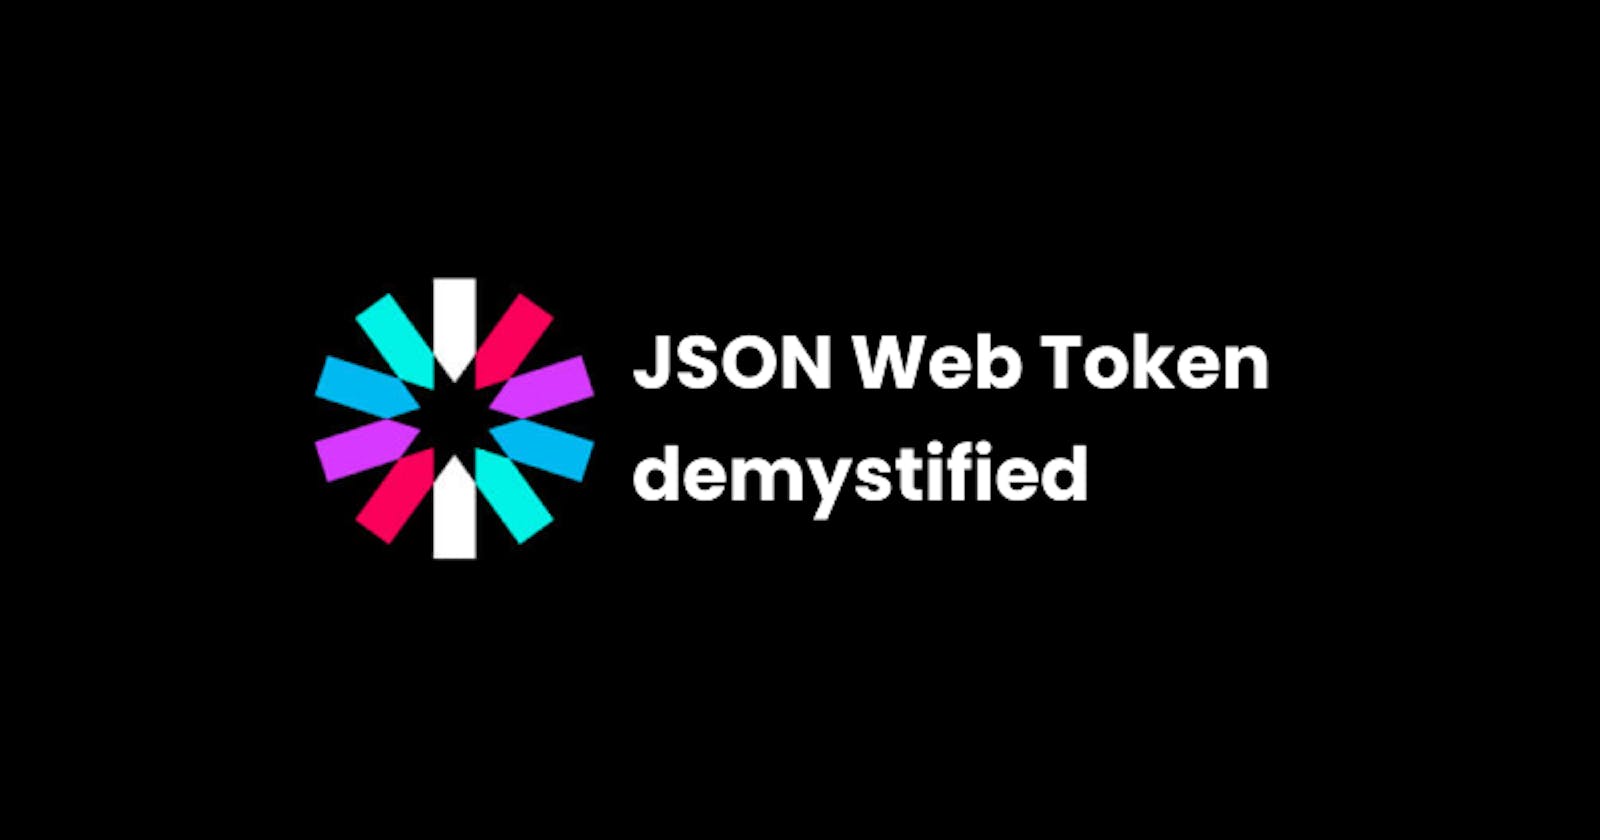 JSON web token(JWT) demystified